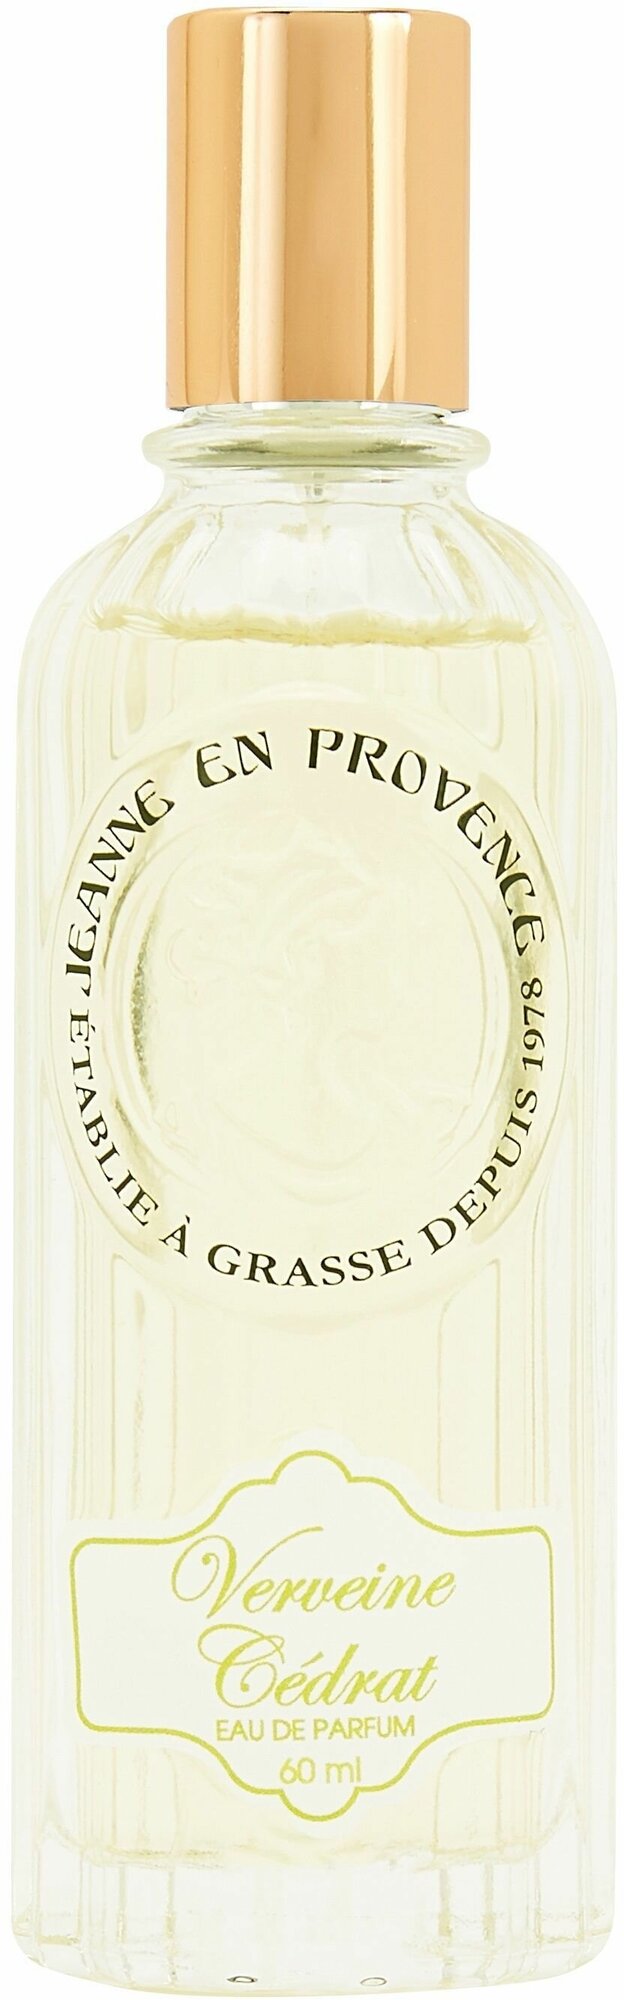 Jeanne En Provence Verveine Cedrat Парфюмерная вода 60 мл